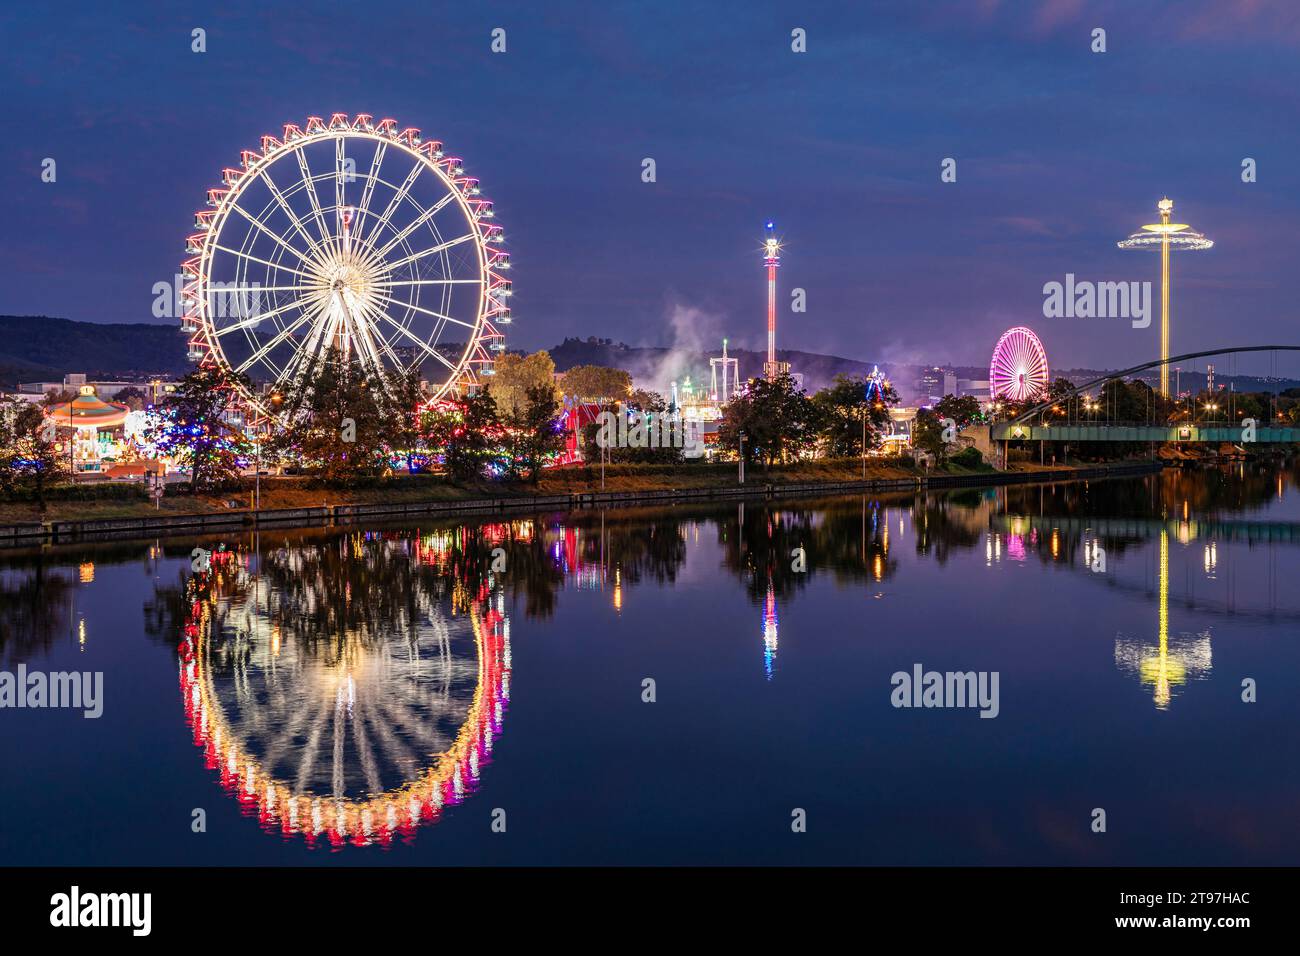 Germany, Baden-Wurttemberg, Stuttgart, Cannstatter Wasen, Glowing Ferris Wheel reflecting in Neckar river at night Stock Photo